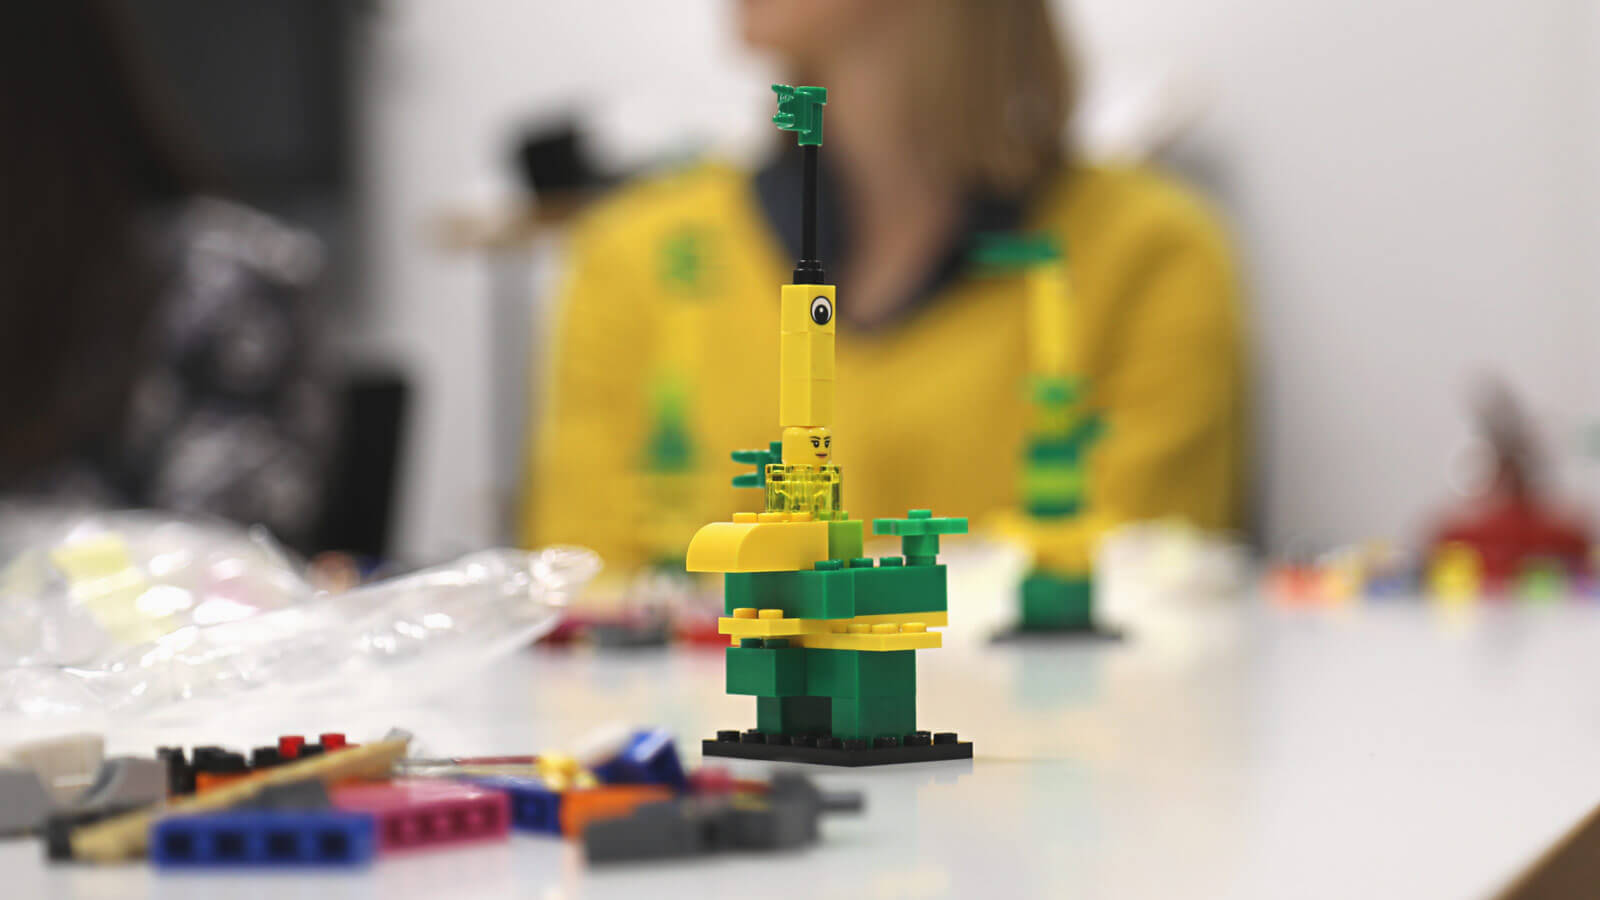 Lego building